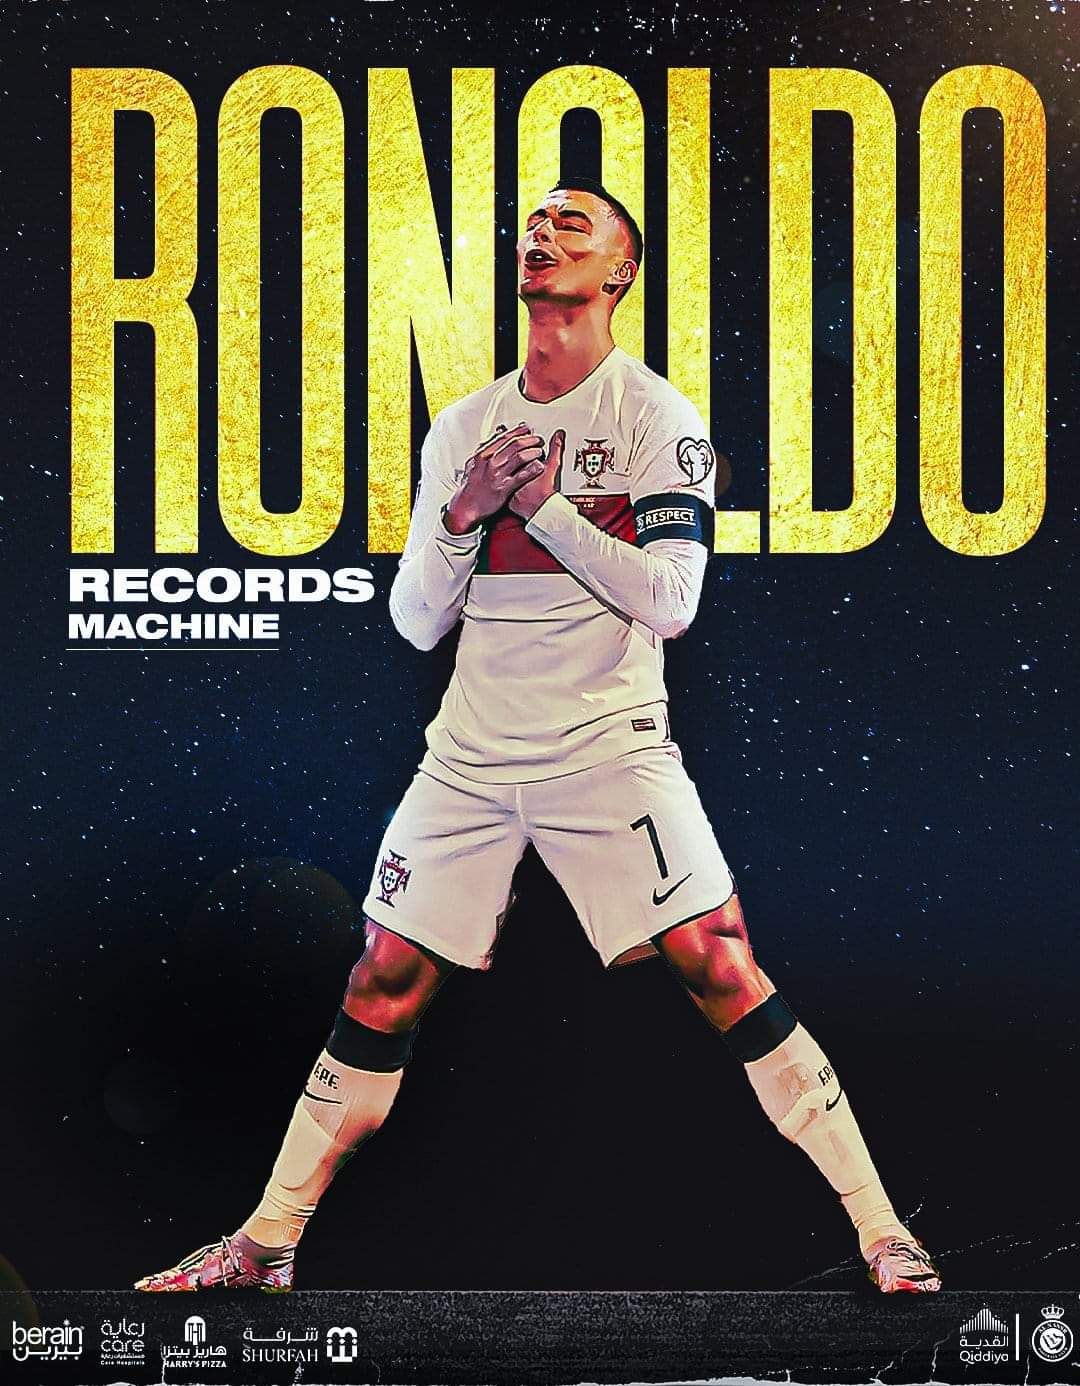 Cristiano Ronaldo: The Legend Who Transcends Football